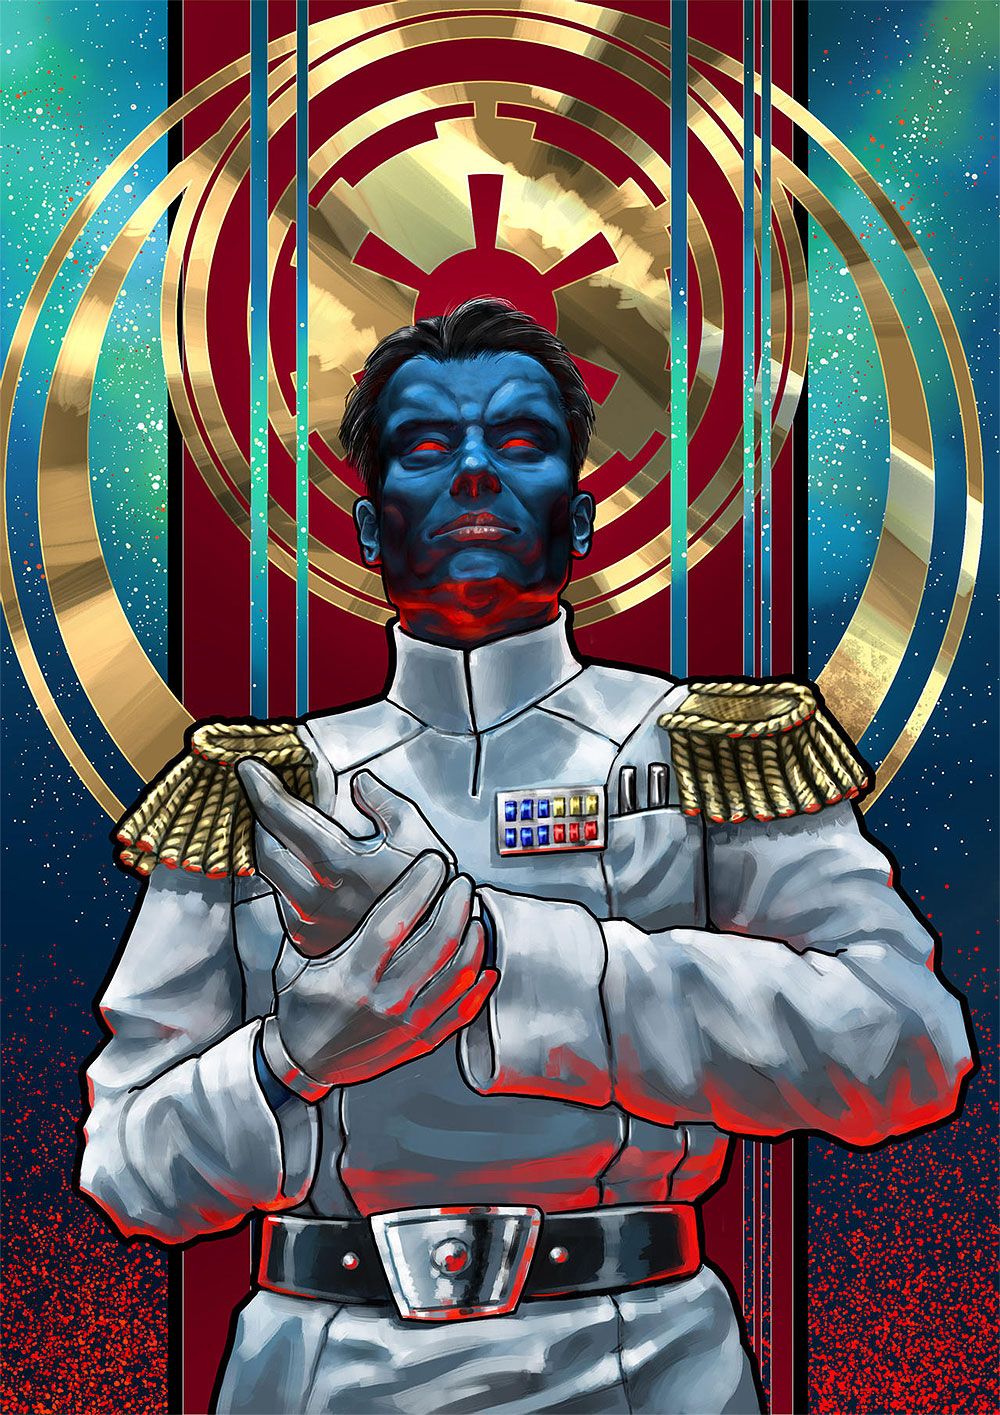 Fan art rendition of Grand Admiral Thrawn